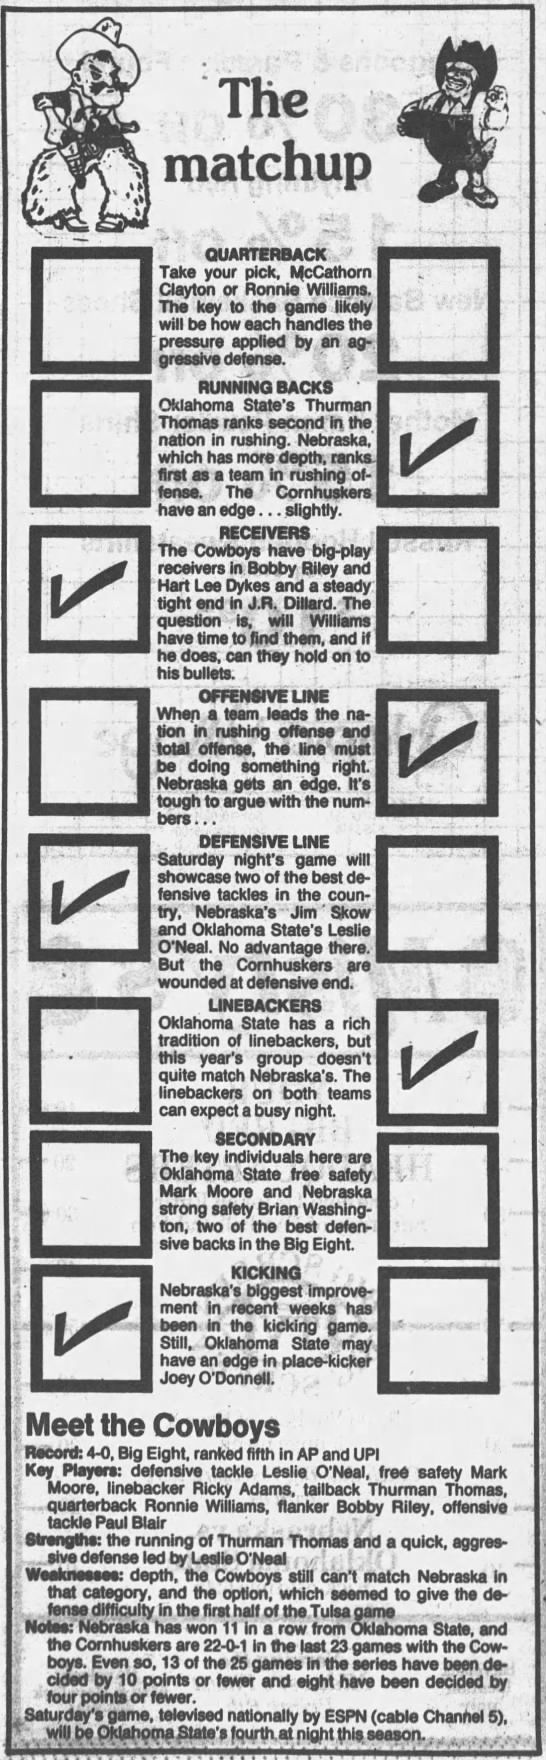 1985 Nebraska-Oklahoma State preview - 